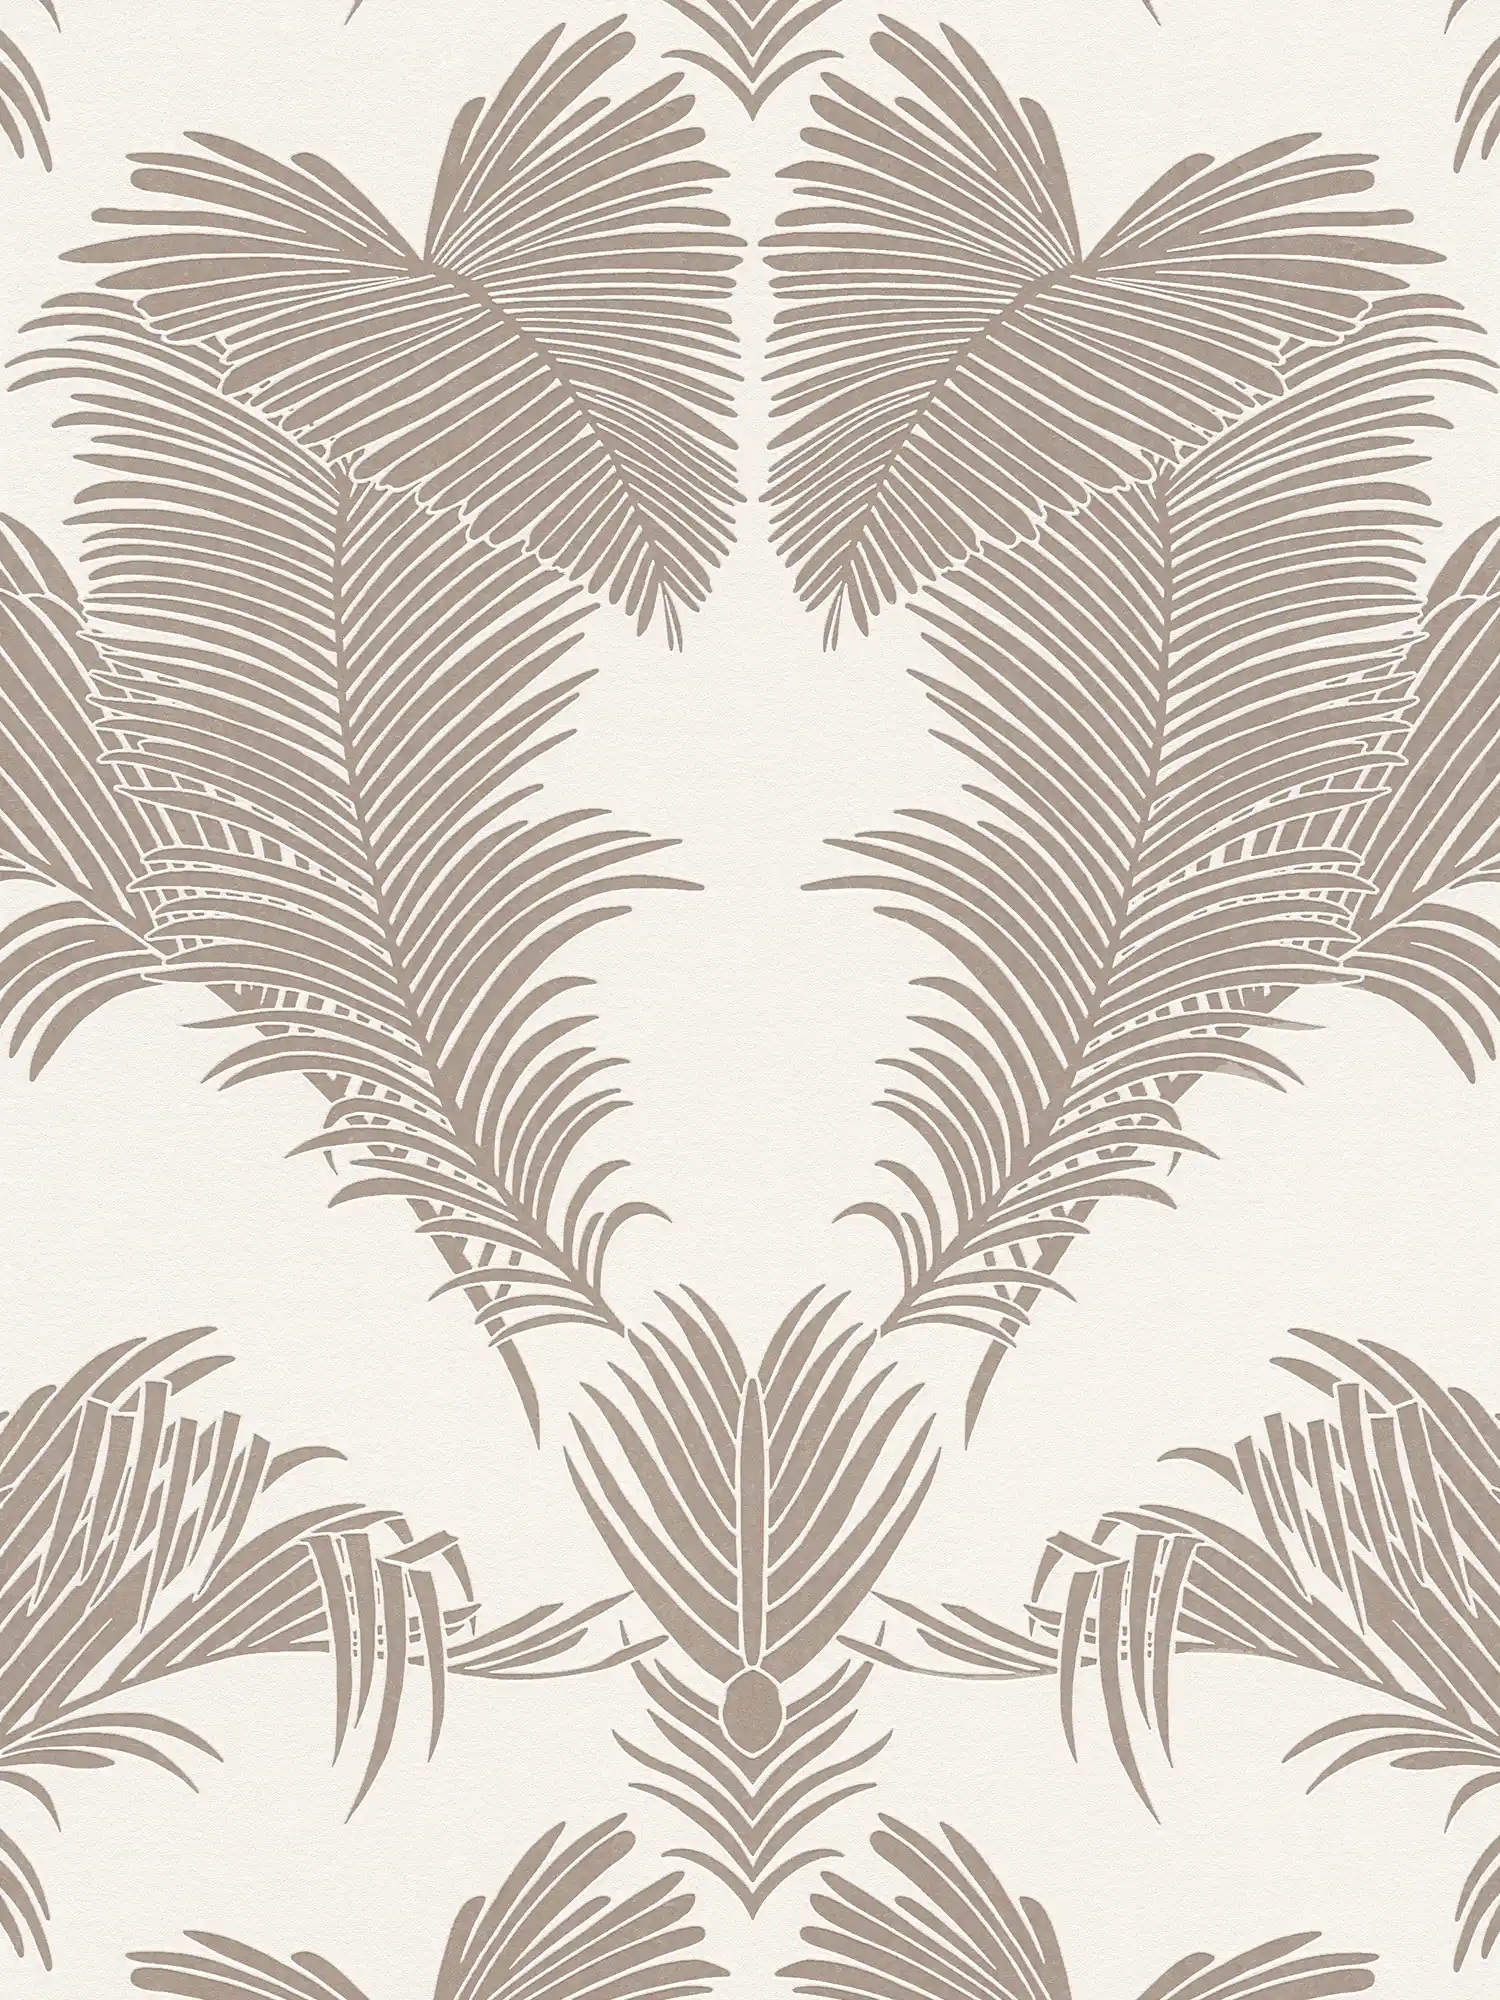 Vliestapete Palmenblätter in Rosa mit Metallic & Matt Effekt
